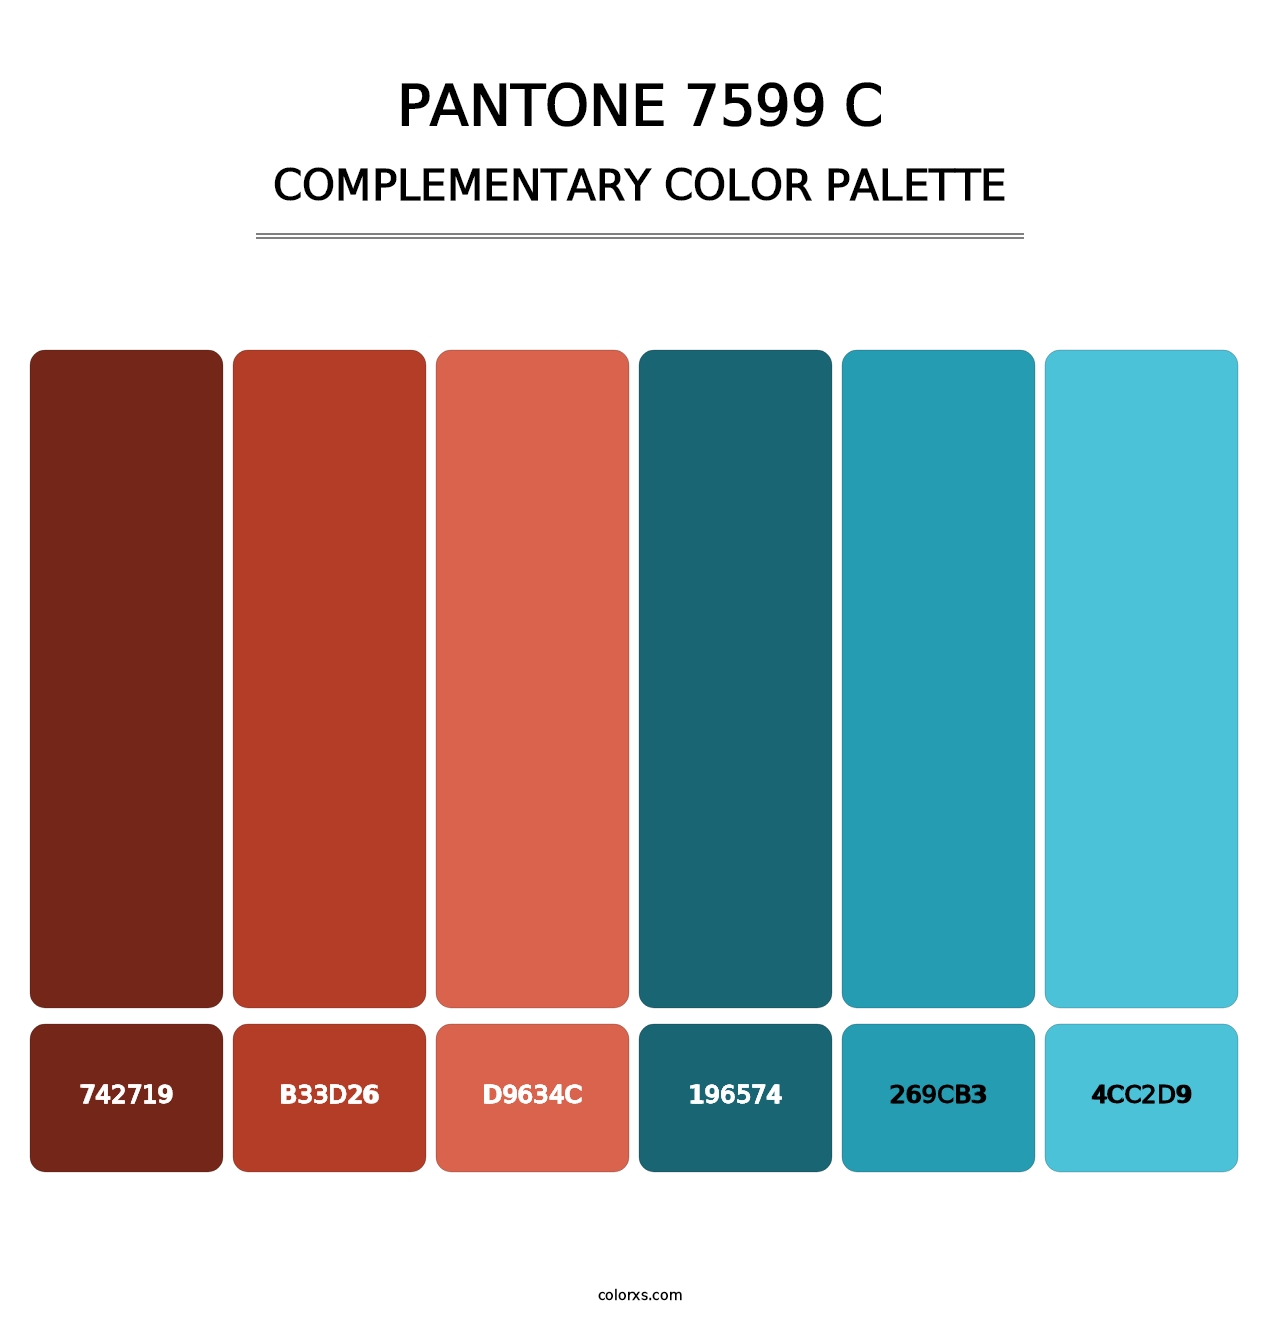 PANTONE 7599 C - Complementary Color Palette